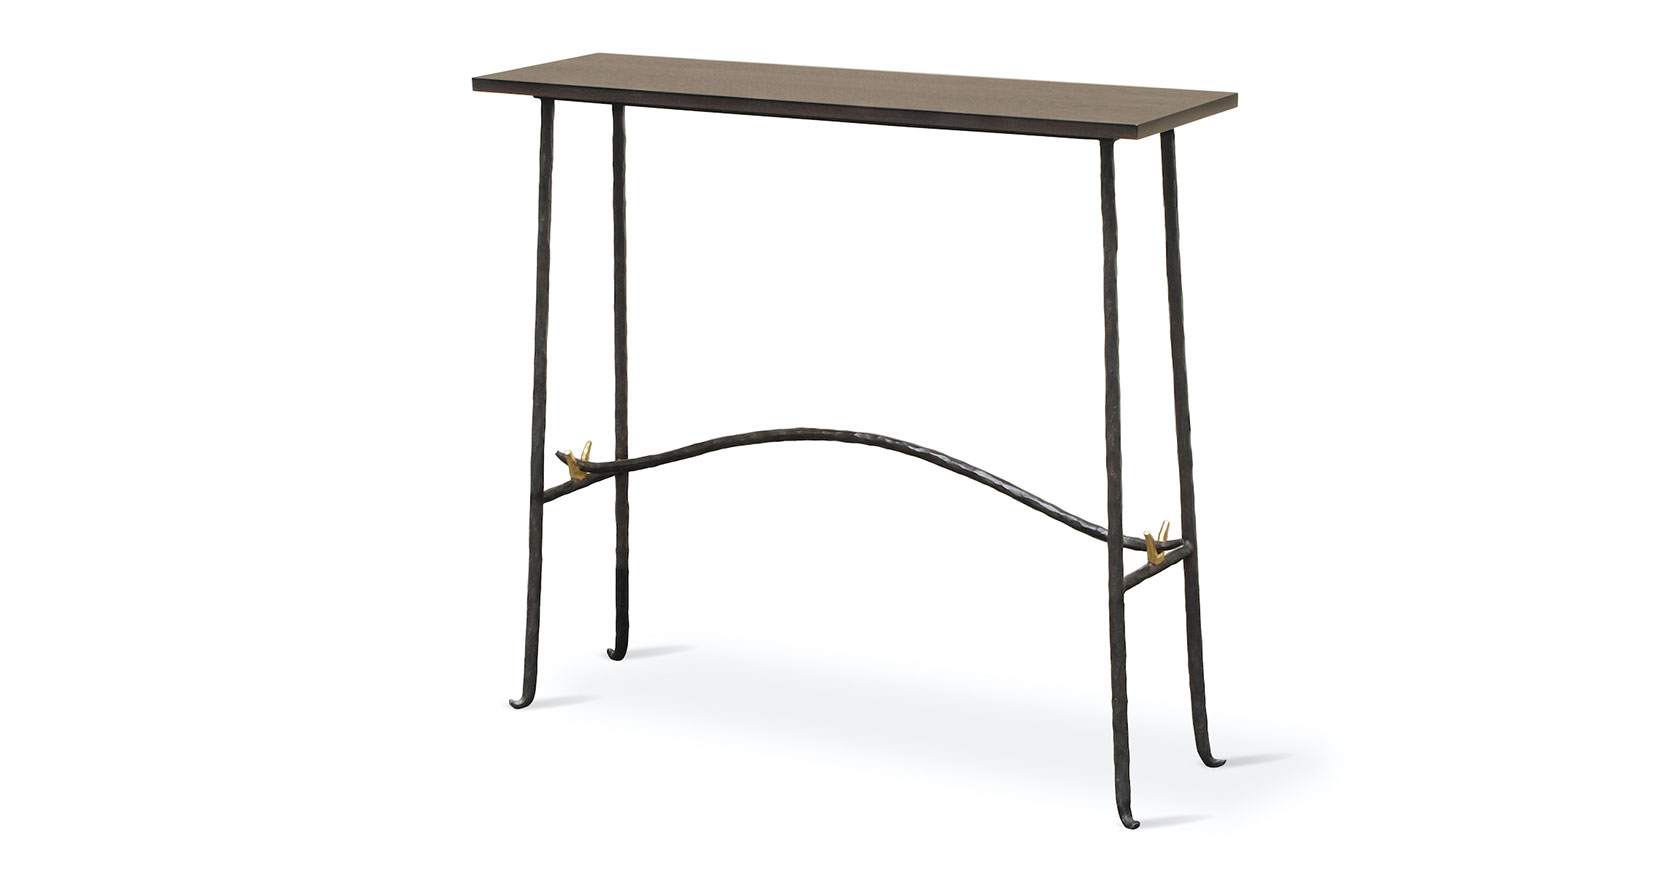 Garouste Bonetti, minimalist rectangular console table, dark wood top, black wrought iron legs slightly curved at the bottom, small gold V-shaped ornaments